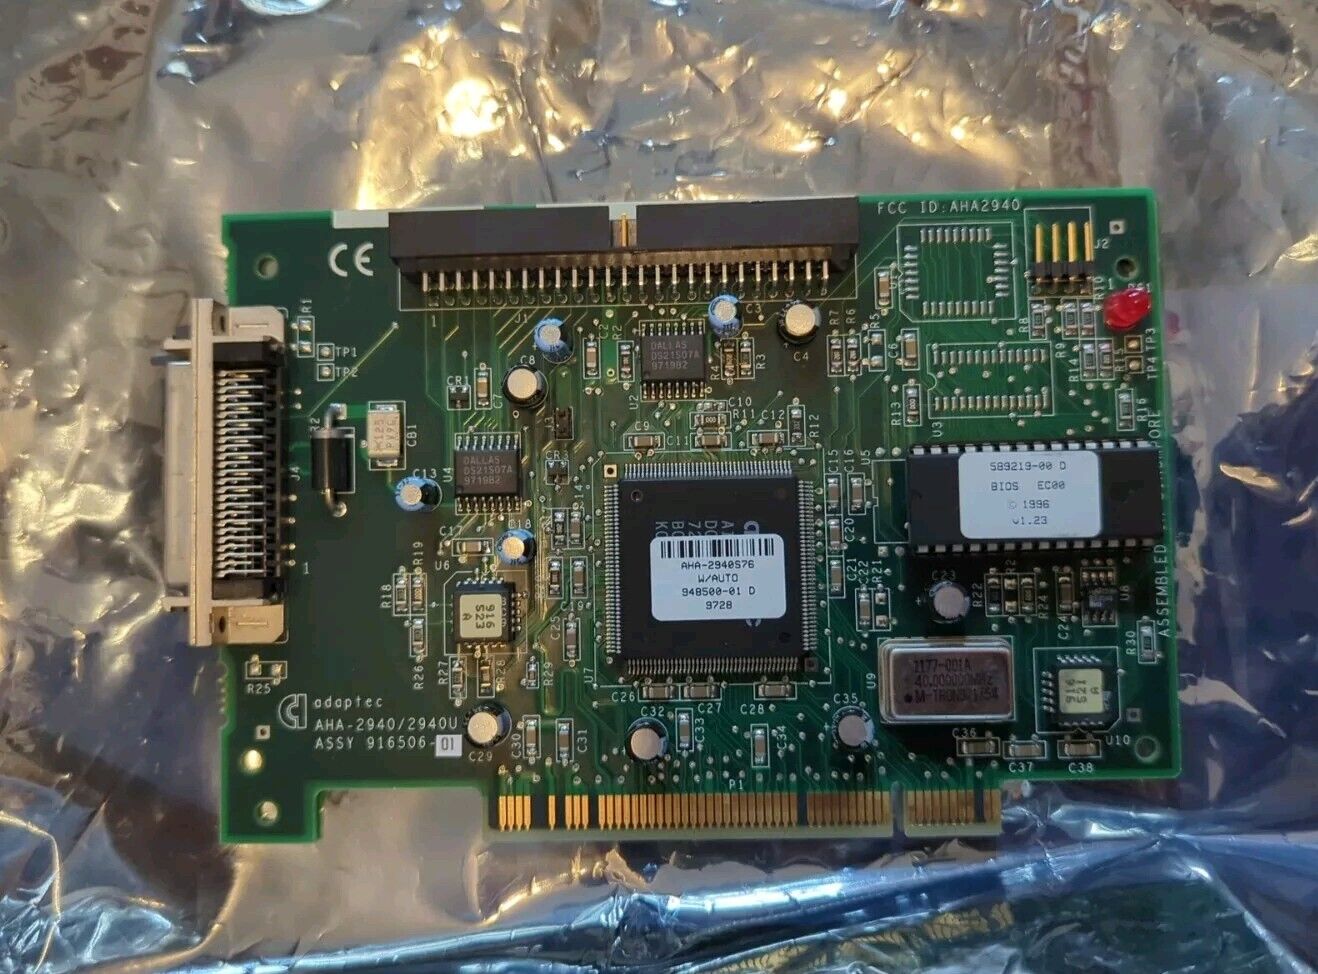 RARE VINTAGE ADAPTEC AHA-2940 2940U SCSI 50 PIN PCI CONTROLLER CARD - PULLS